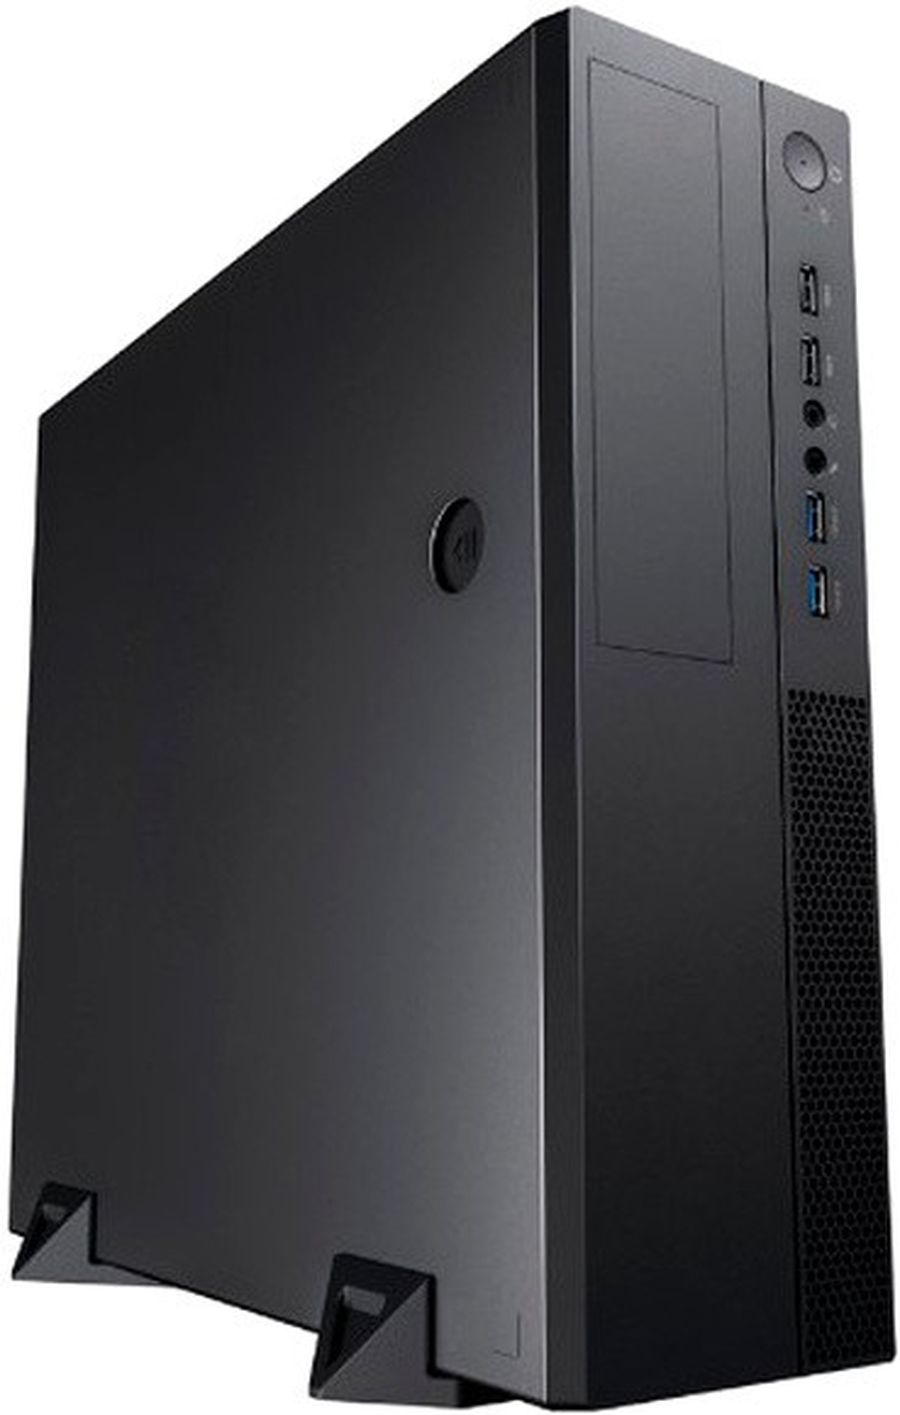 Корпус Powerman Slim Case EL510 Black PM-300ATX (6141273) inwin корпус desktop el510bk pm 300atx u3 0 2axxx slim case 6141273